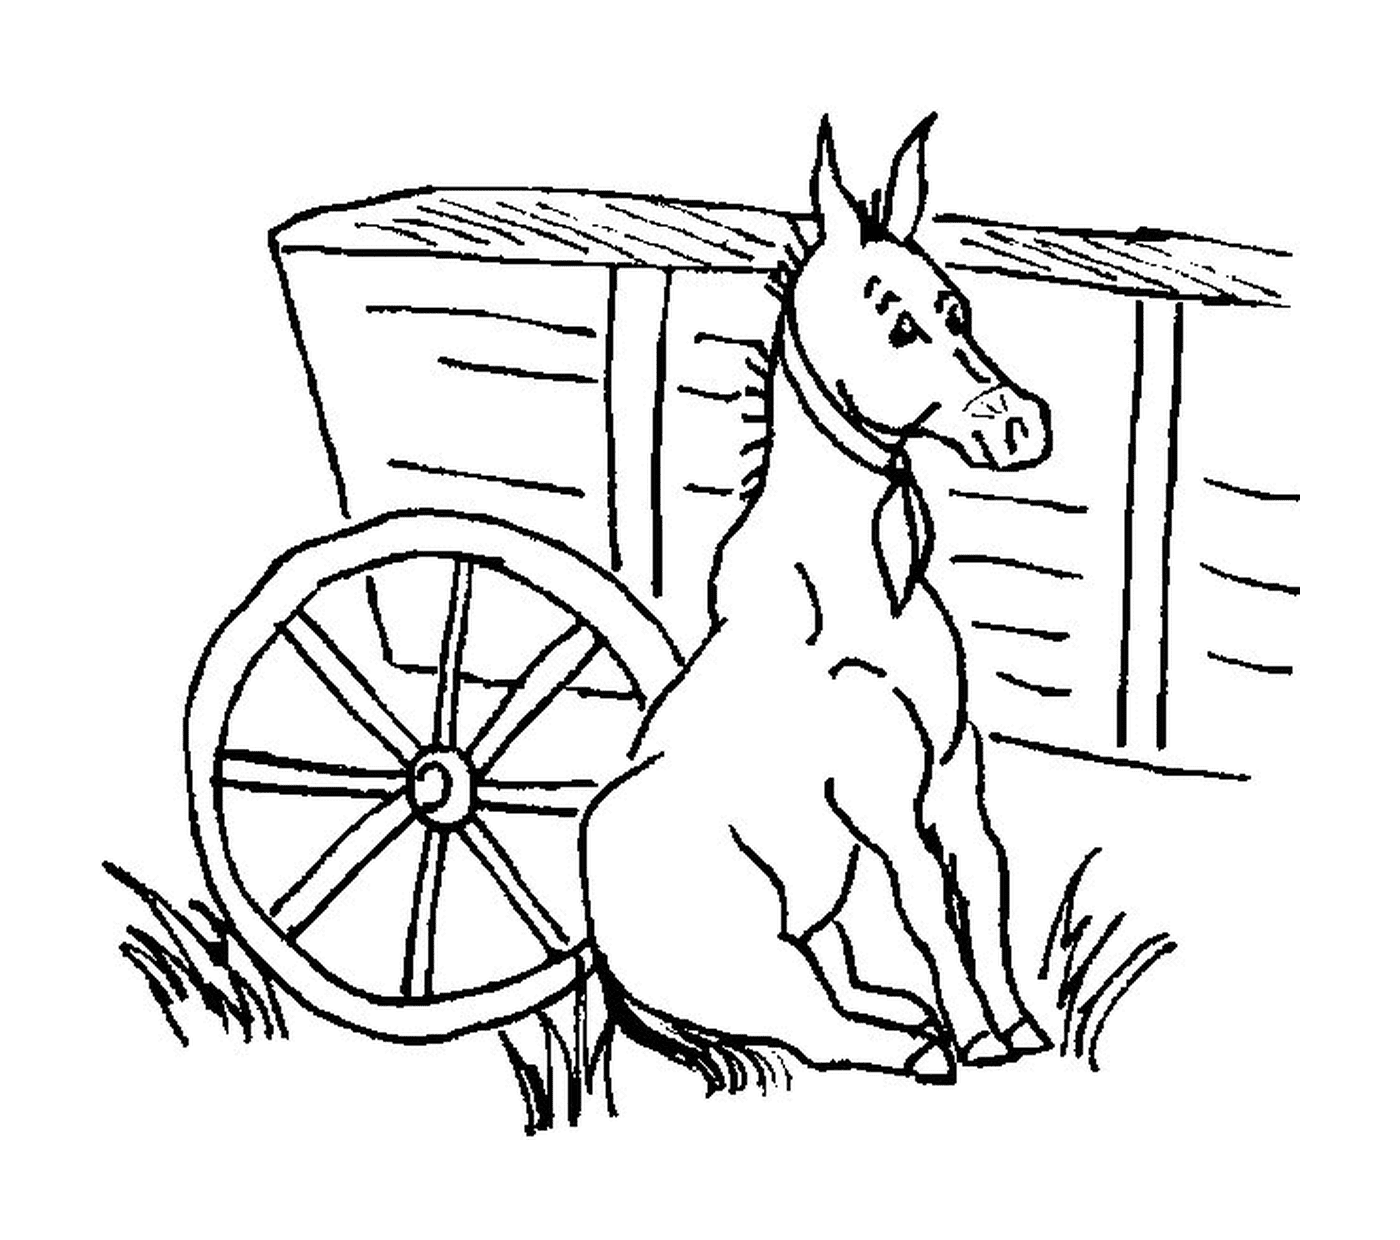  A donkey sitting next to a cart 